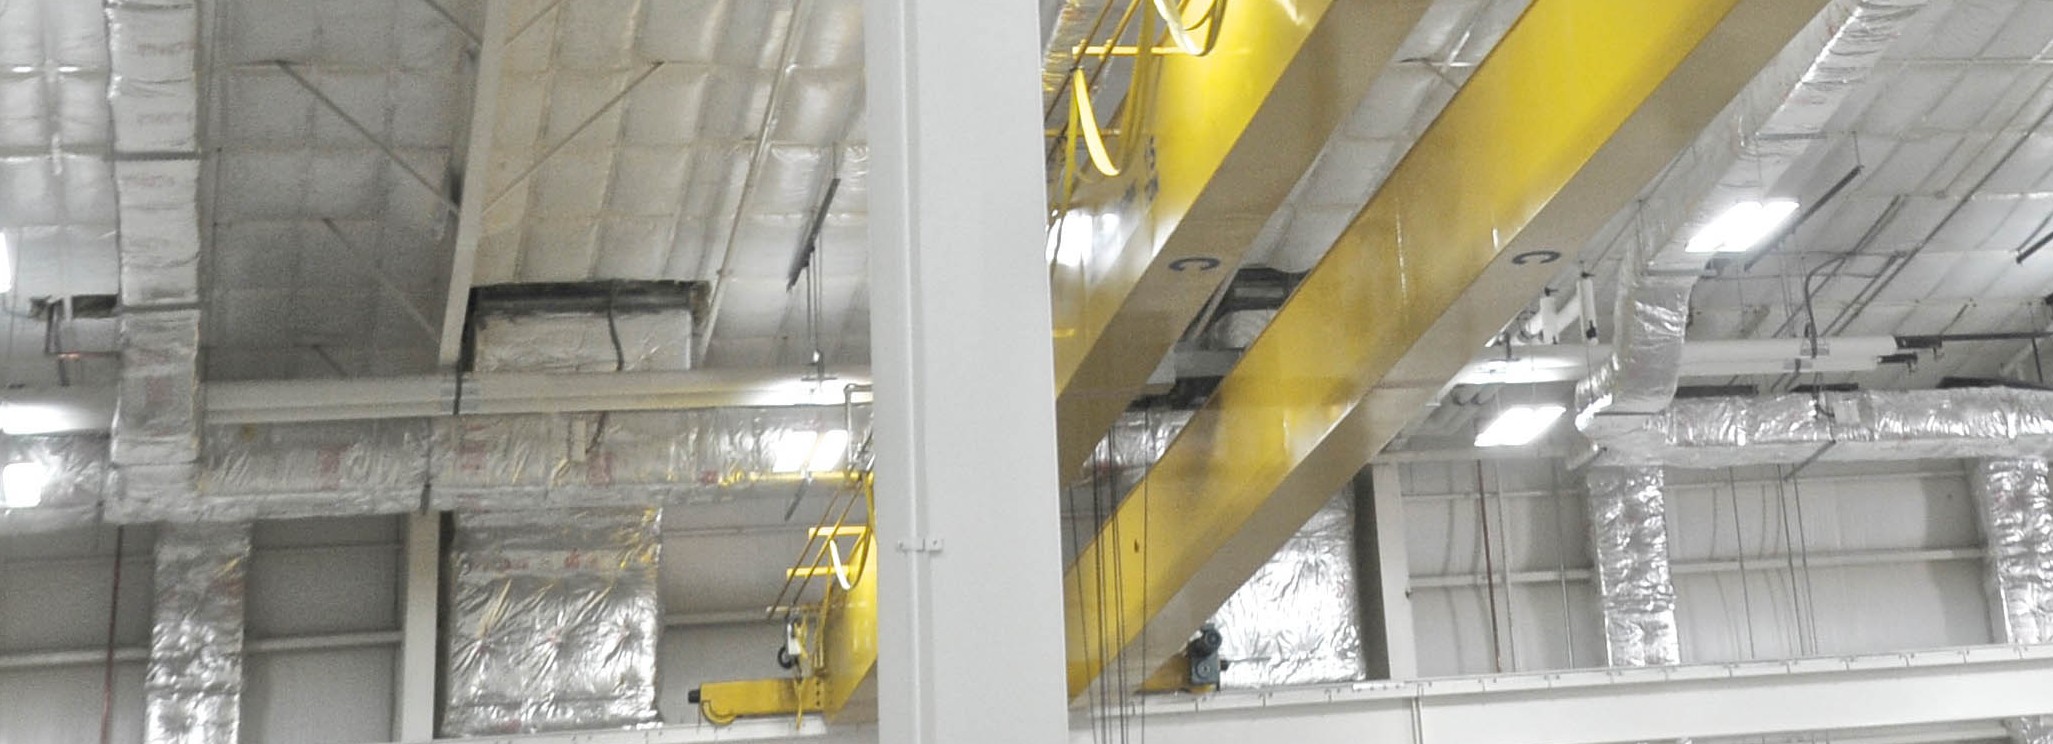 Progressive Industries Industrial Construction Interior Ceiling